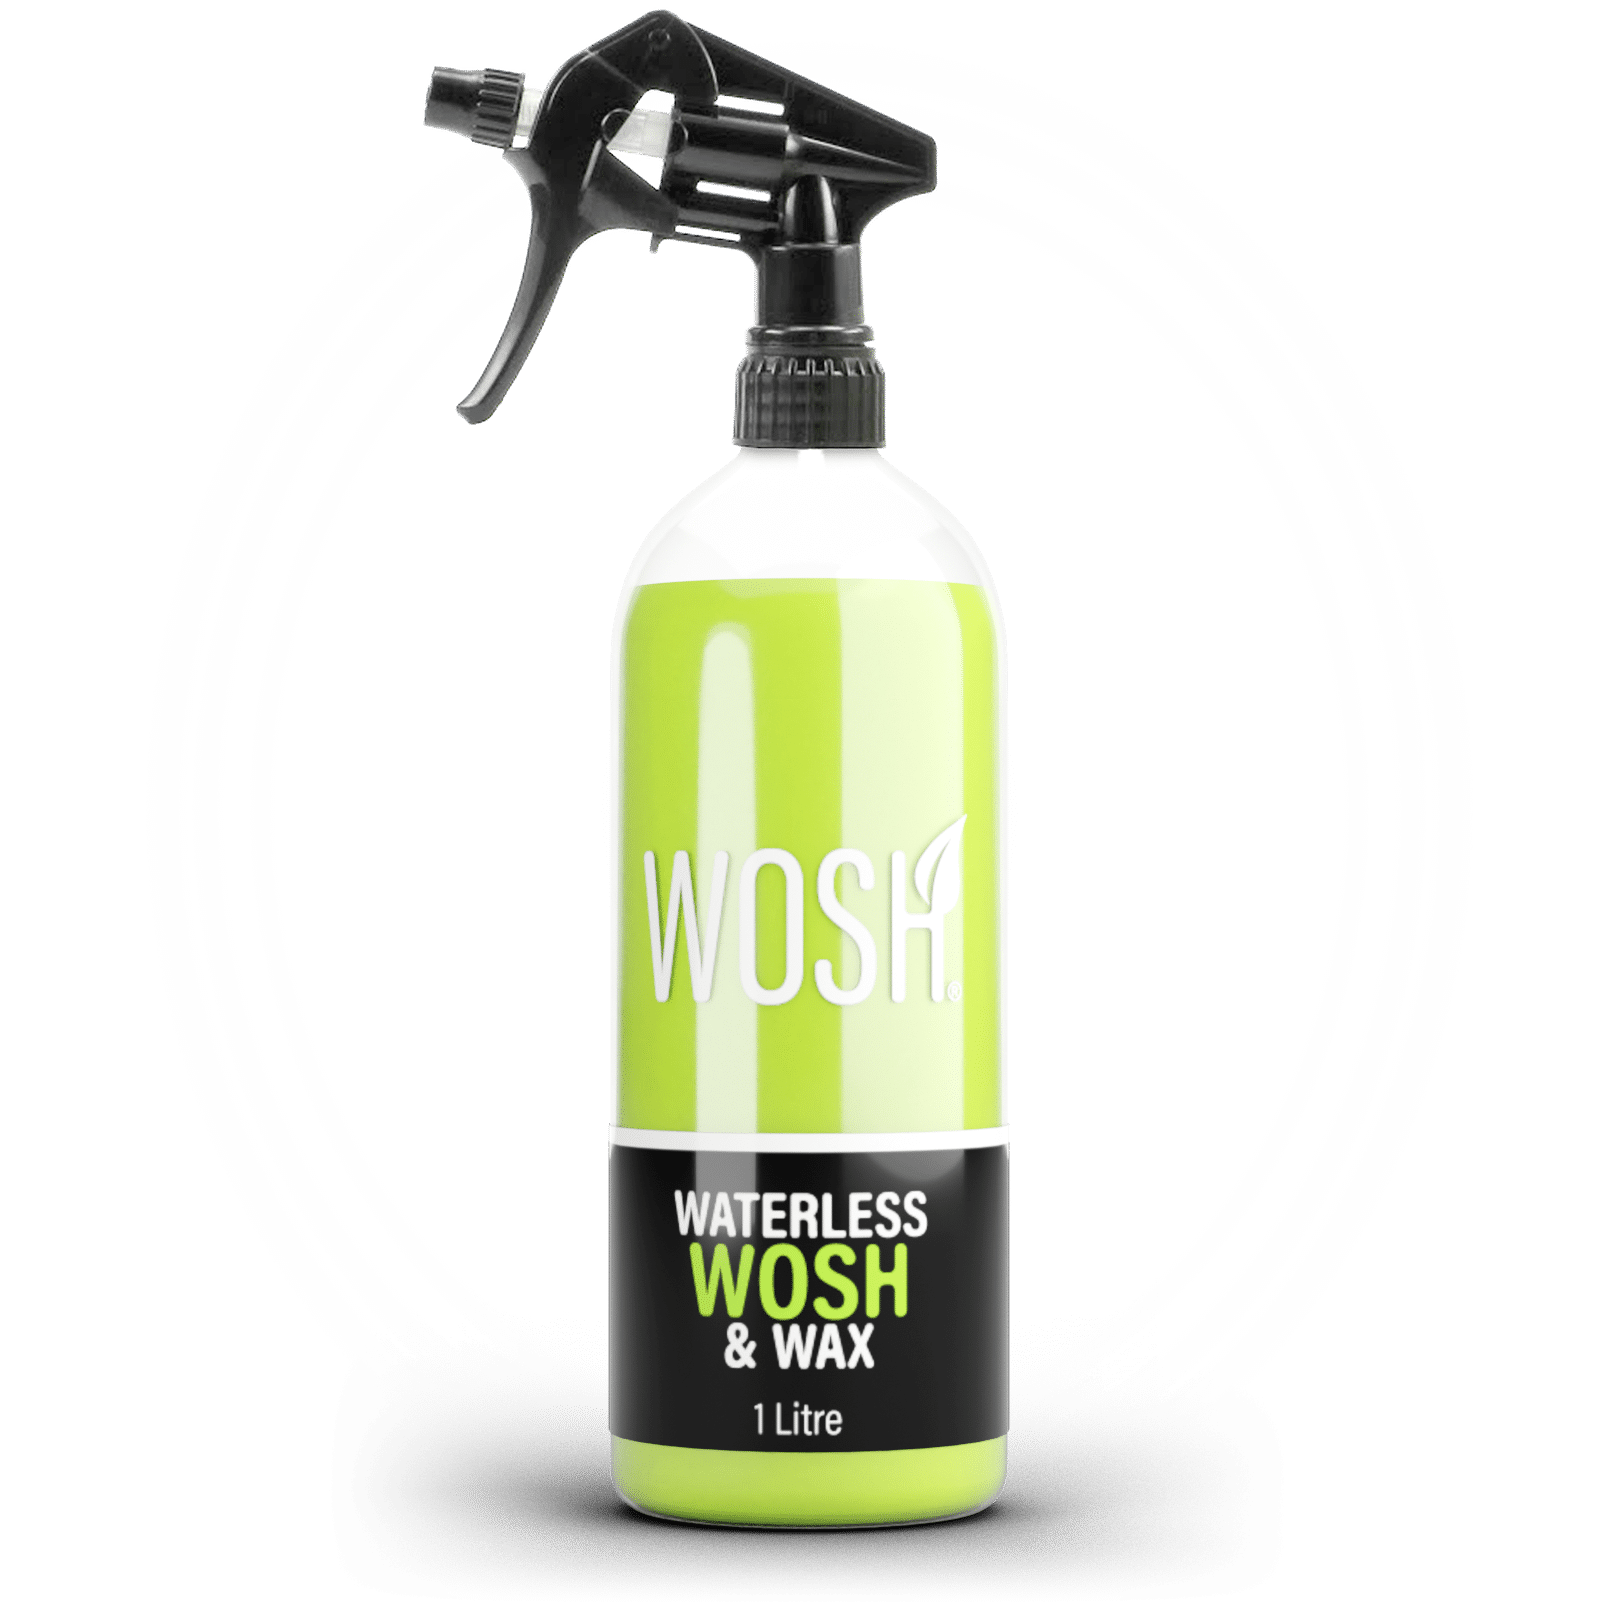 Waterless WOSH & Wax